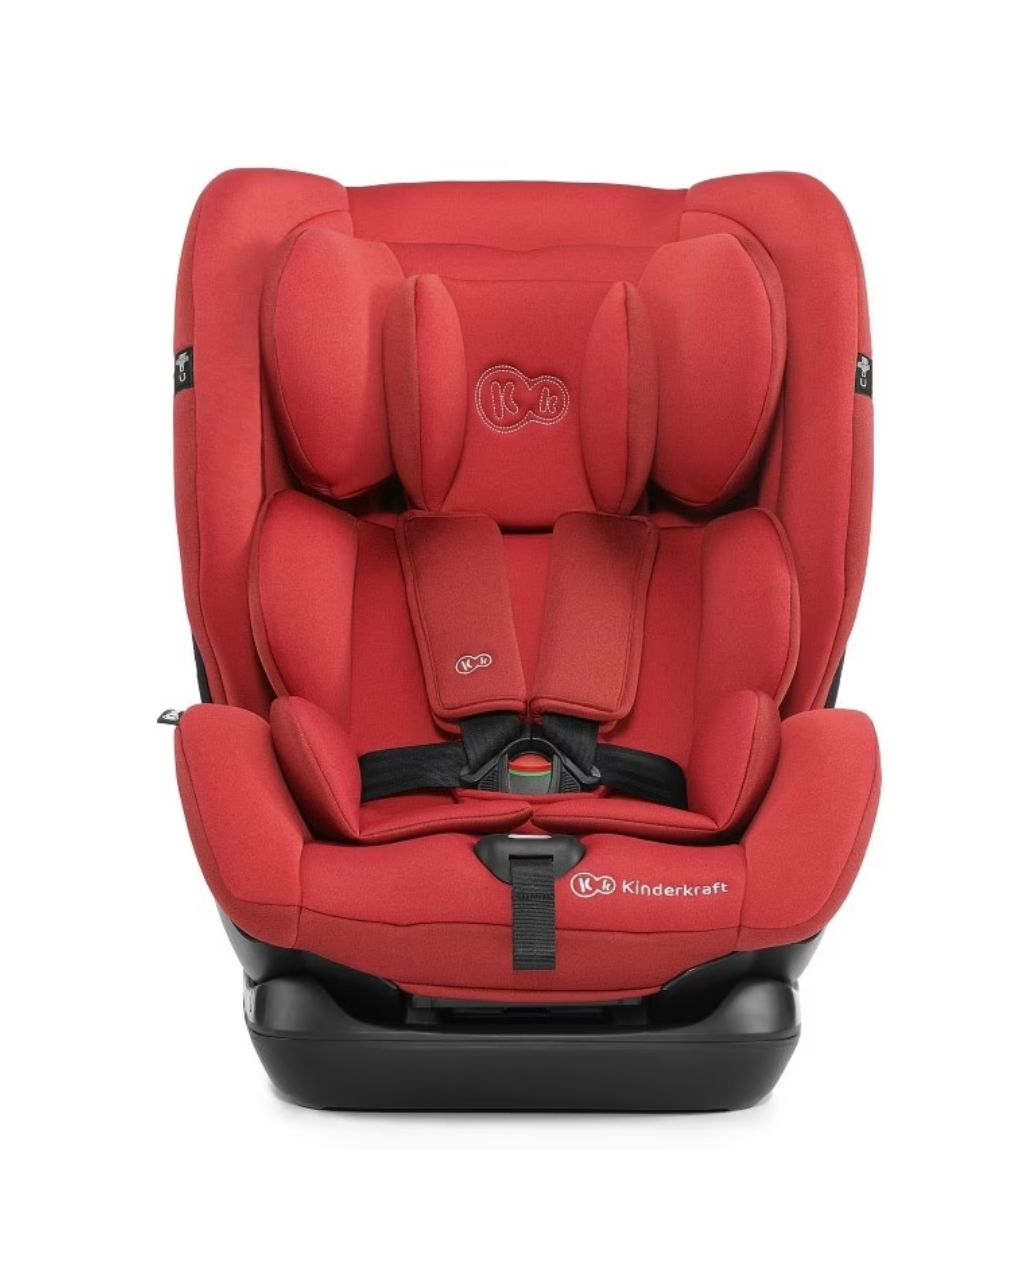 Kinderkraft κάθισμα αυτοκινήτου myway with isofix system, red